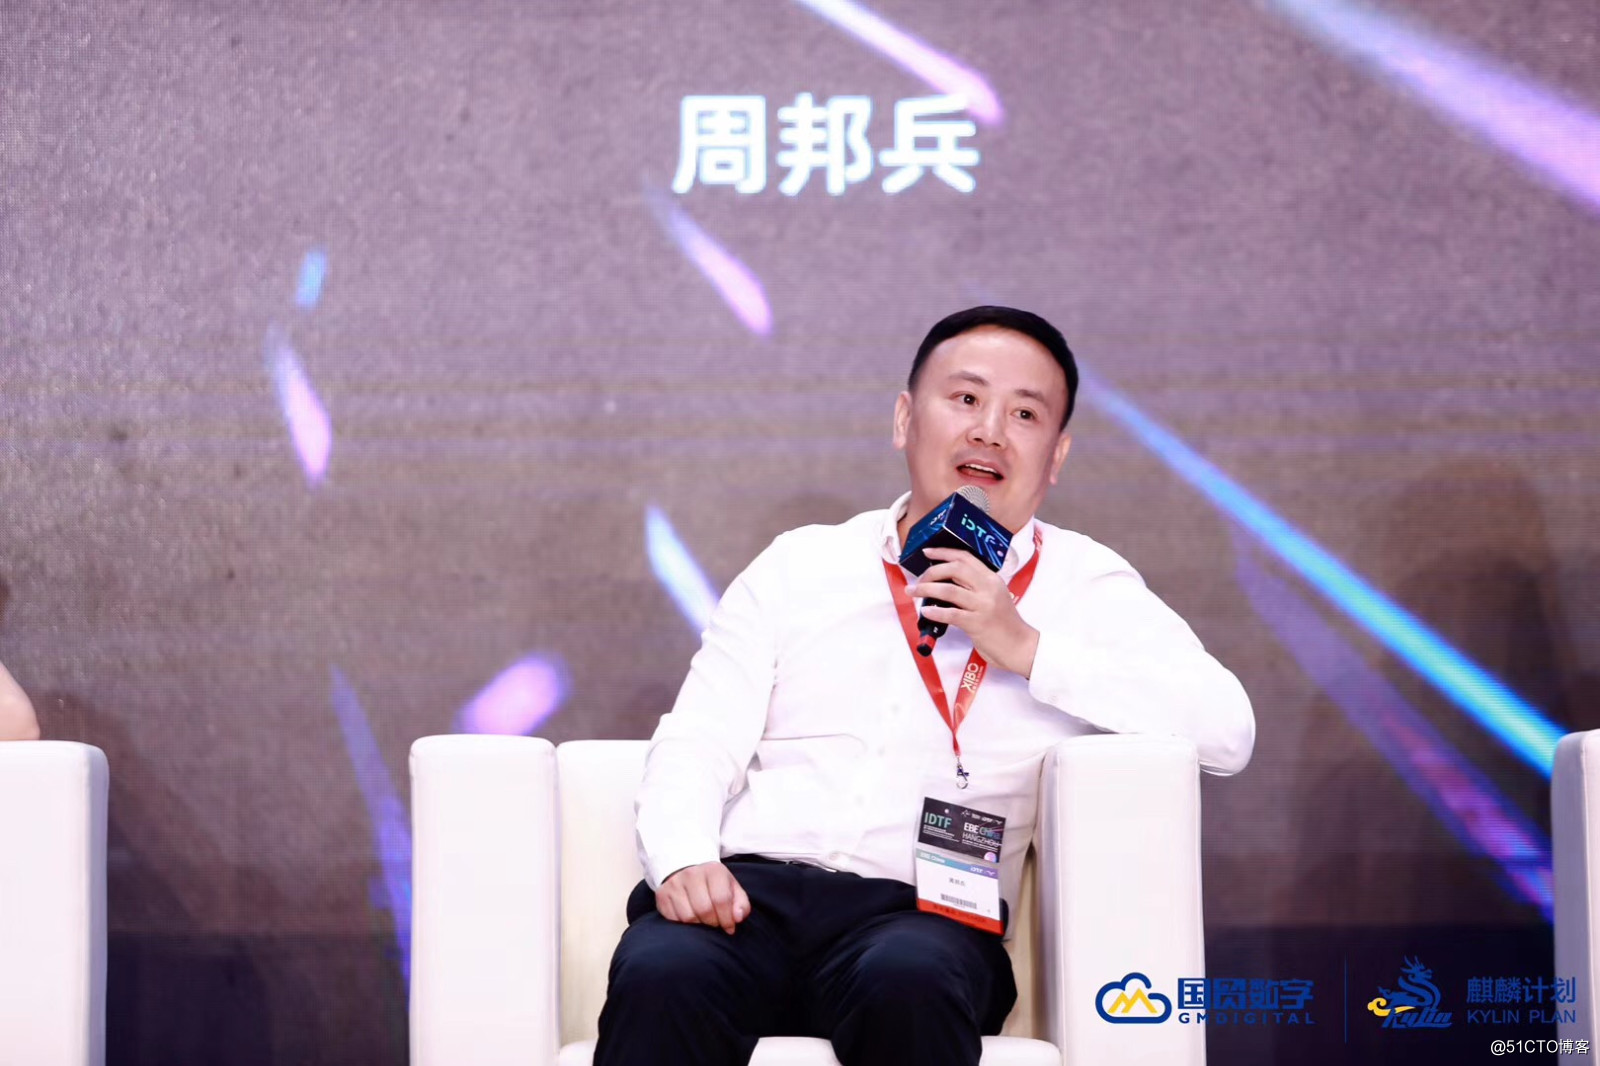 Czech Republic with Zhoubang Bing attended the 2019 China (Hangzhou) International Electronic Commerce Exhibition